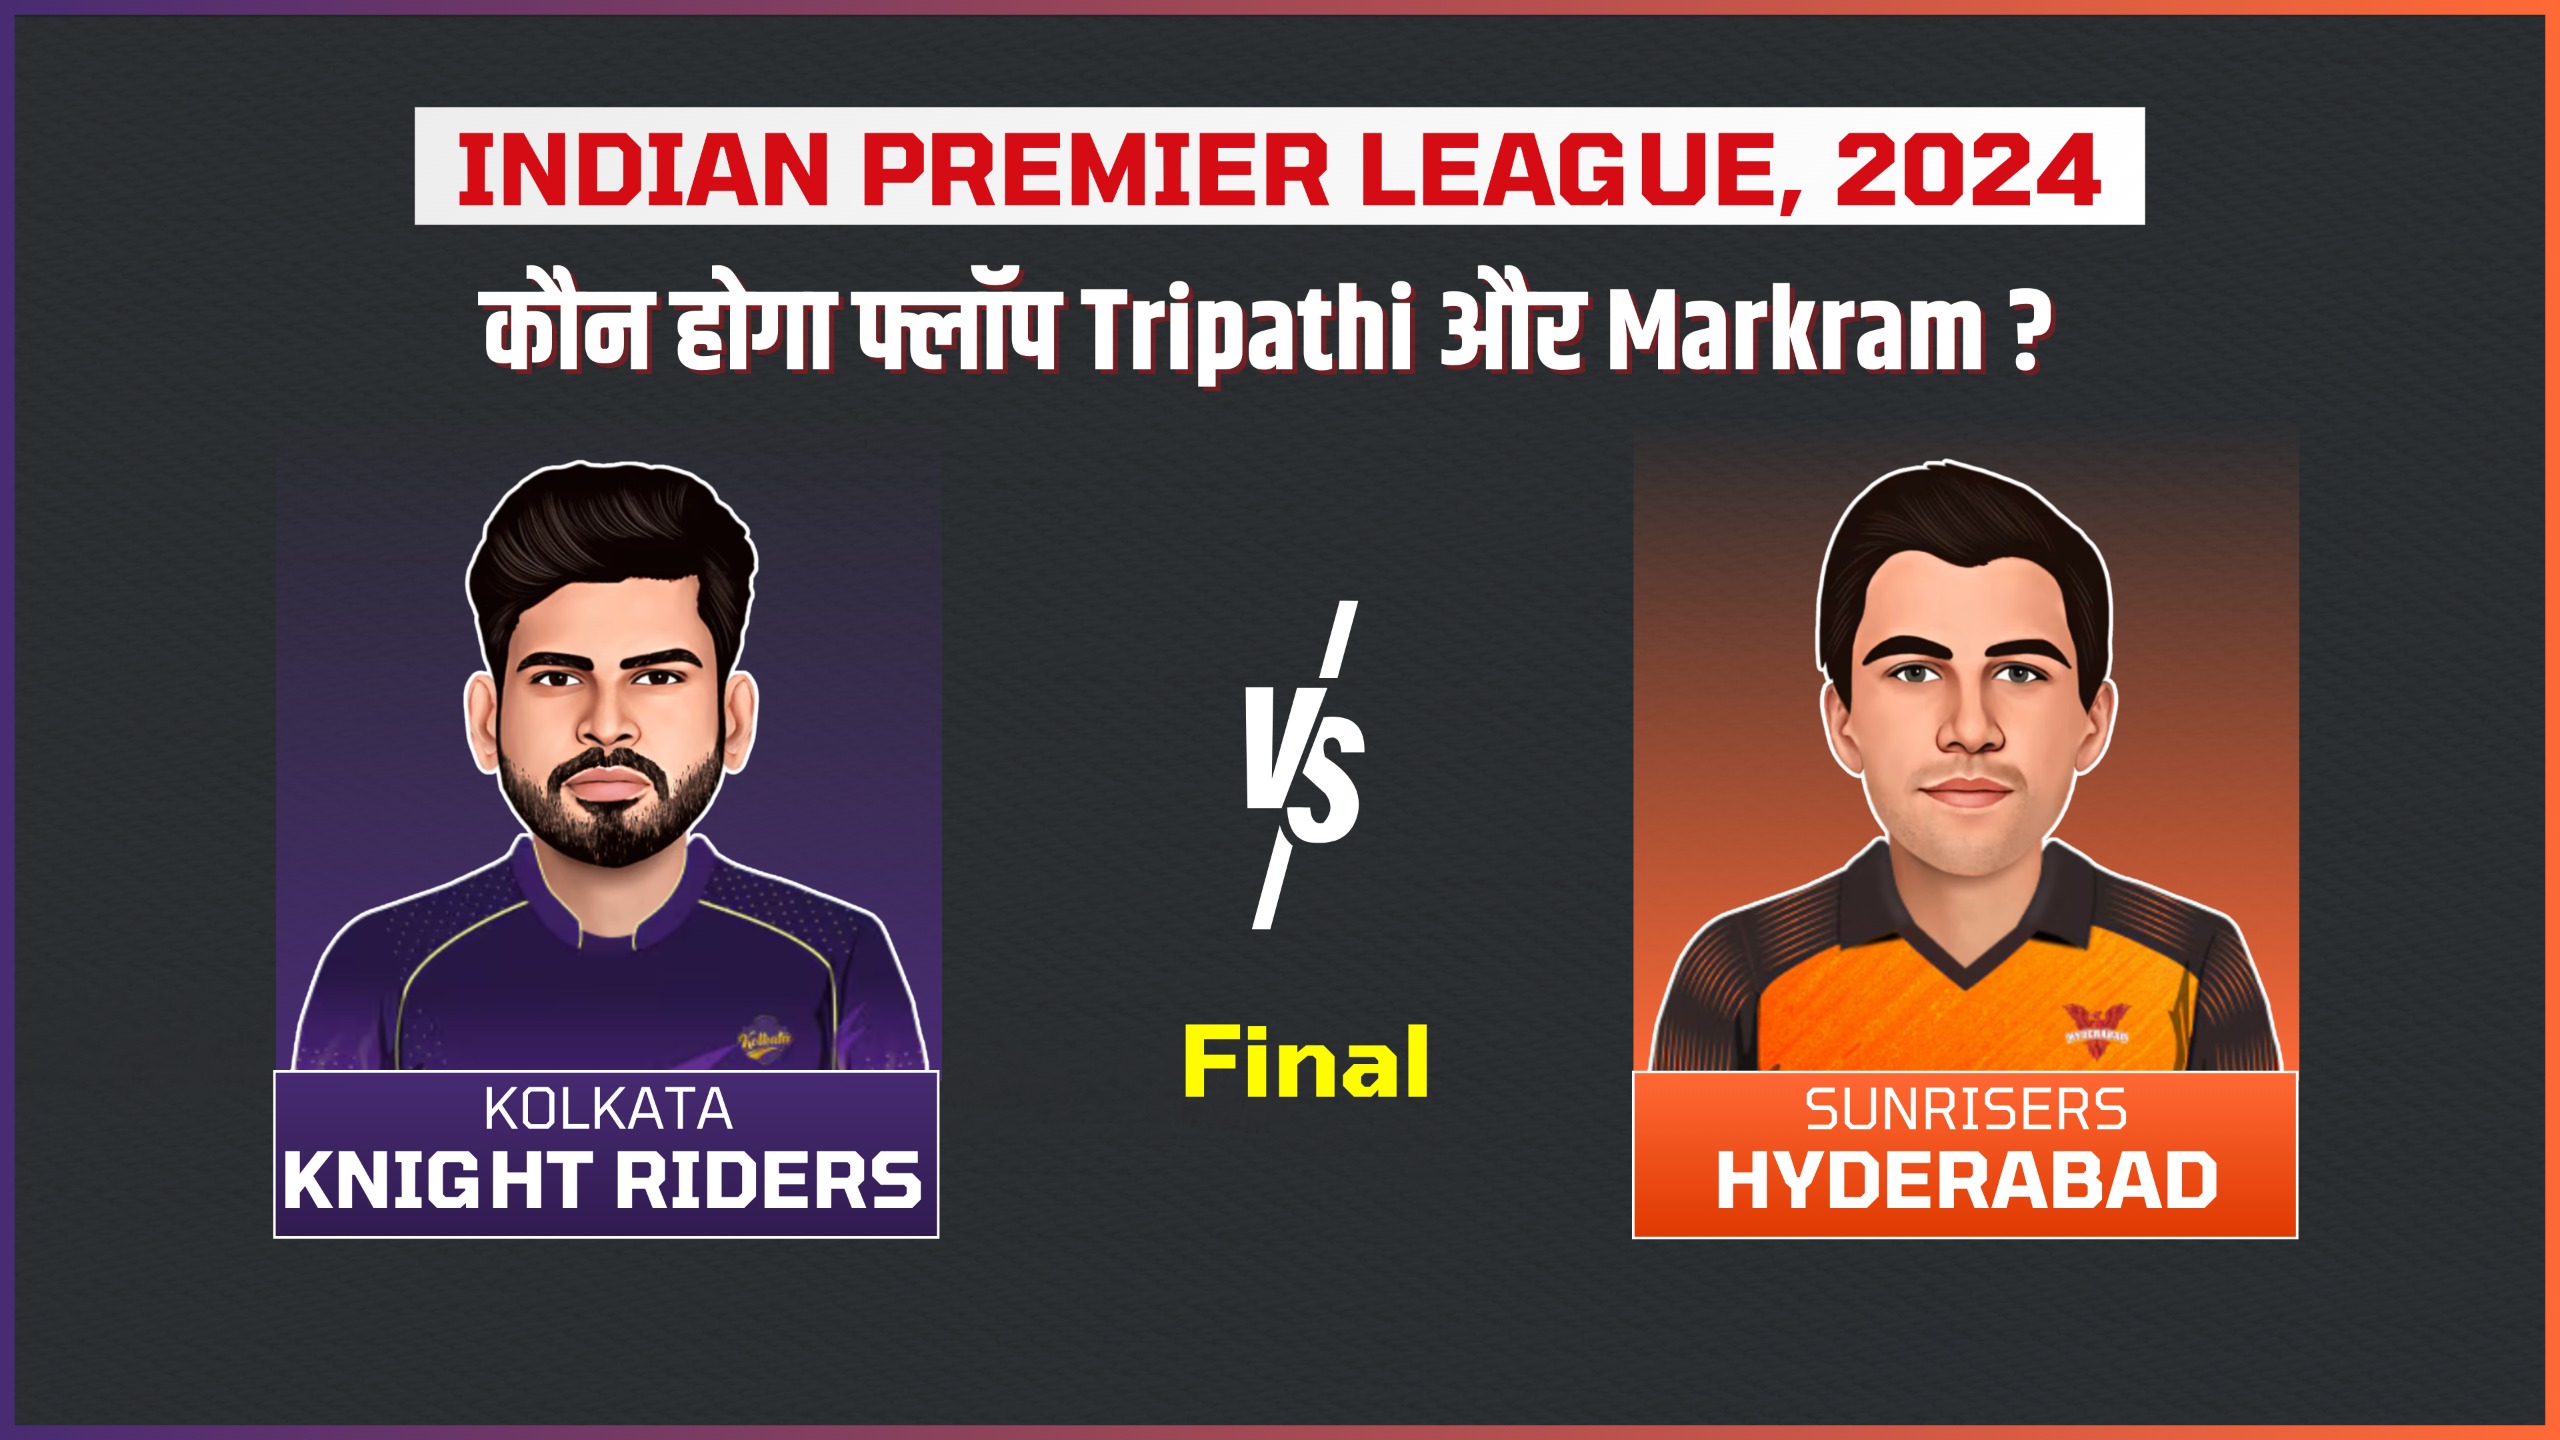 Final: Kolkata Knight Riders vs Sunrisers Hyderabad | Fantasy Preview